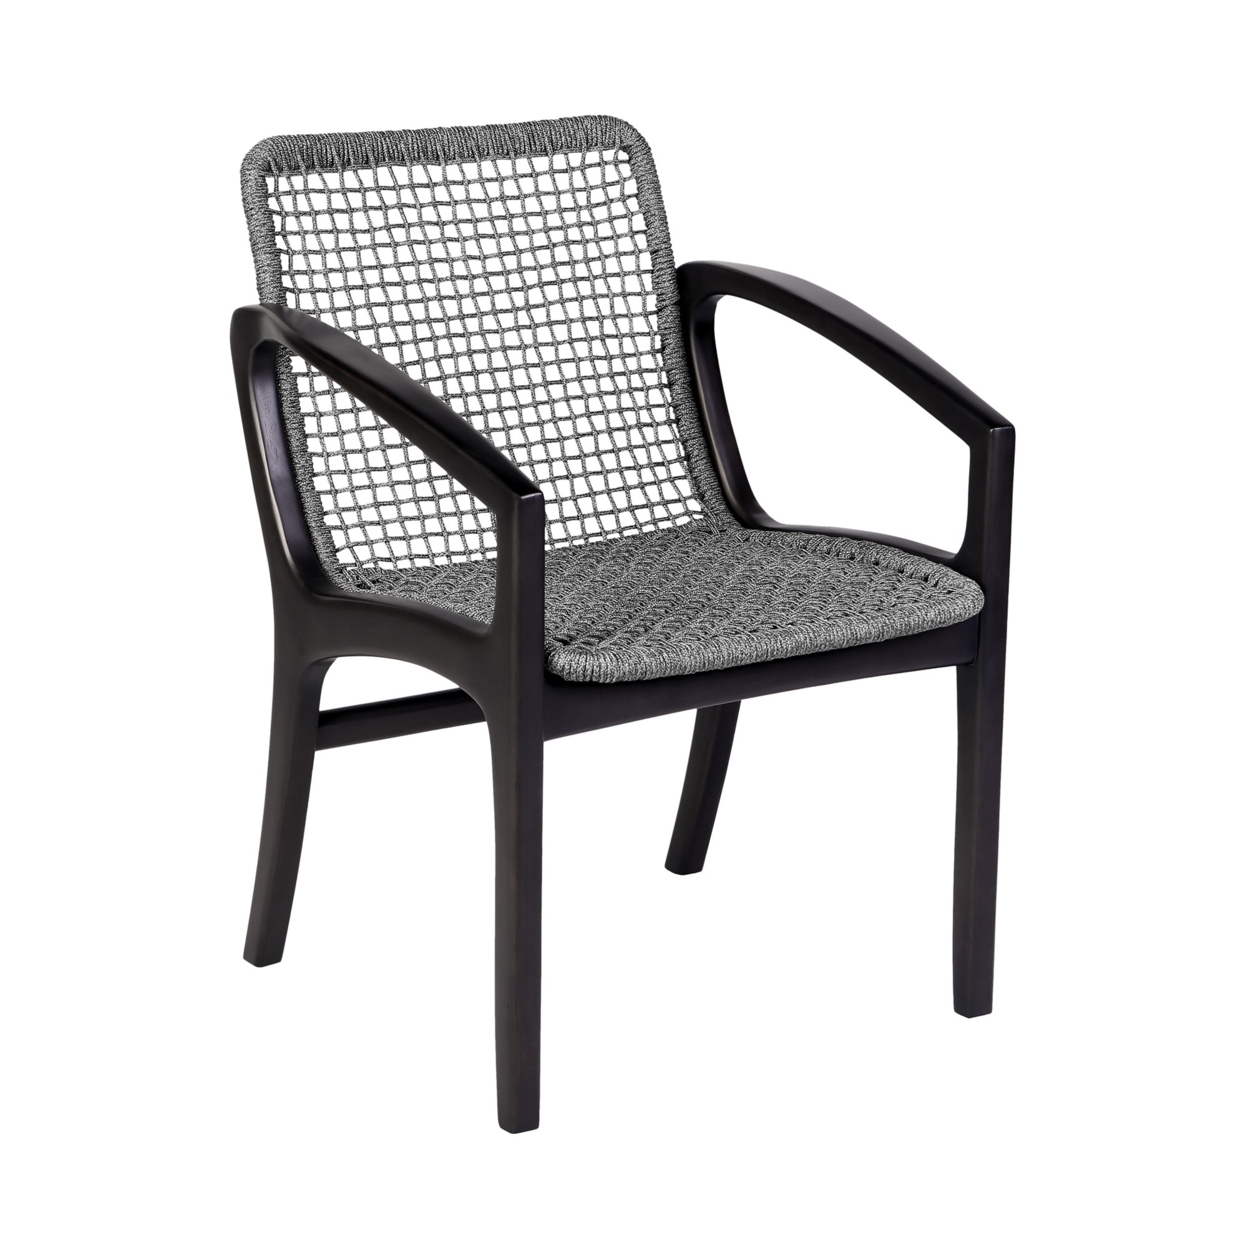 Tye 25 Inch Patio DIning Chair, Dark Eucalyptus Wood, Gray Rope Seating- Saltoro Sherpi